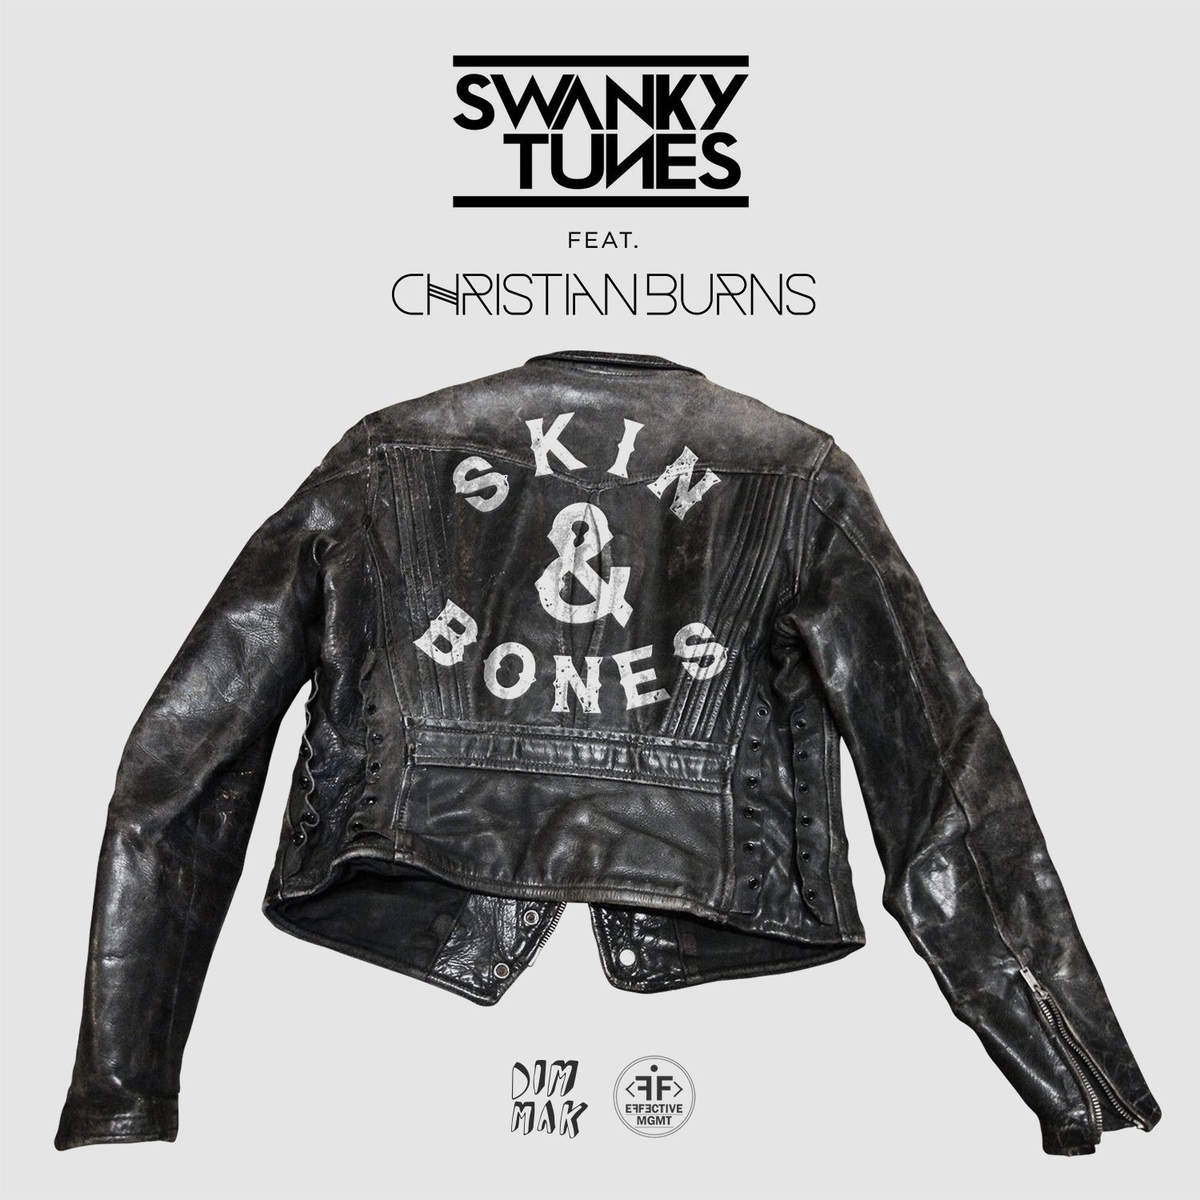 Swanky tunes remix. Swanky Tunes Skin and Bones. Skin and Bones одежда. Костюм Swanky. Christian Burns.